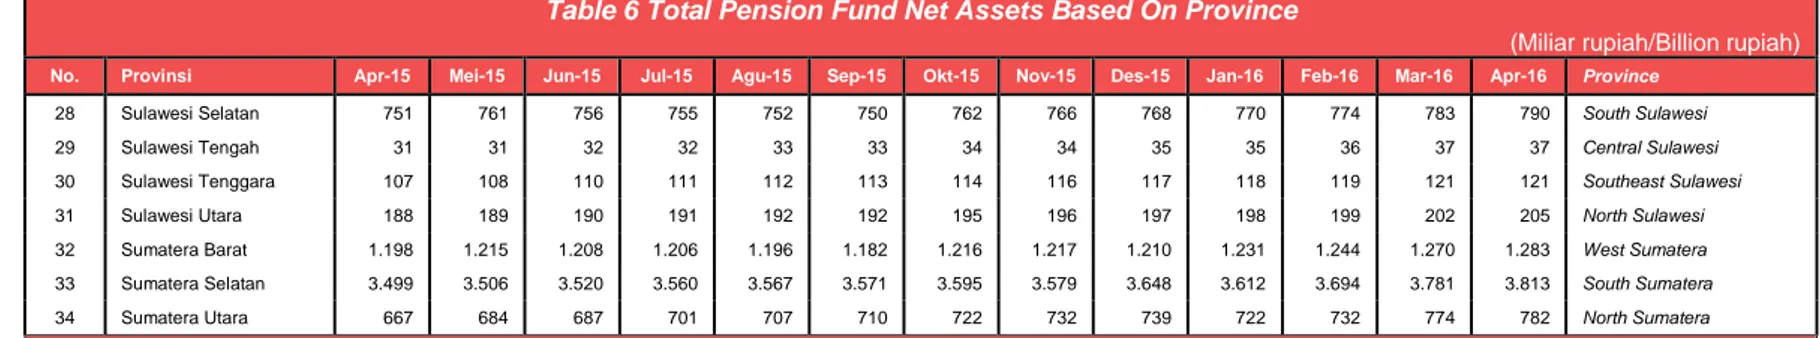 Tabel 6 Jumlah Aset Bersih Dana Pensiun Berdasarkan Provinsi   Table 6 Total Pension Fund Net Assets Based On Province 